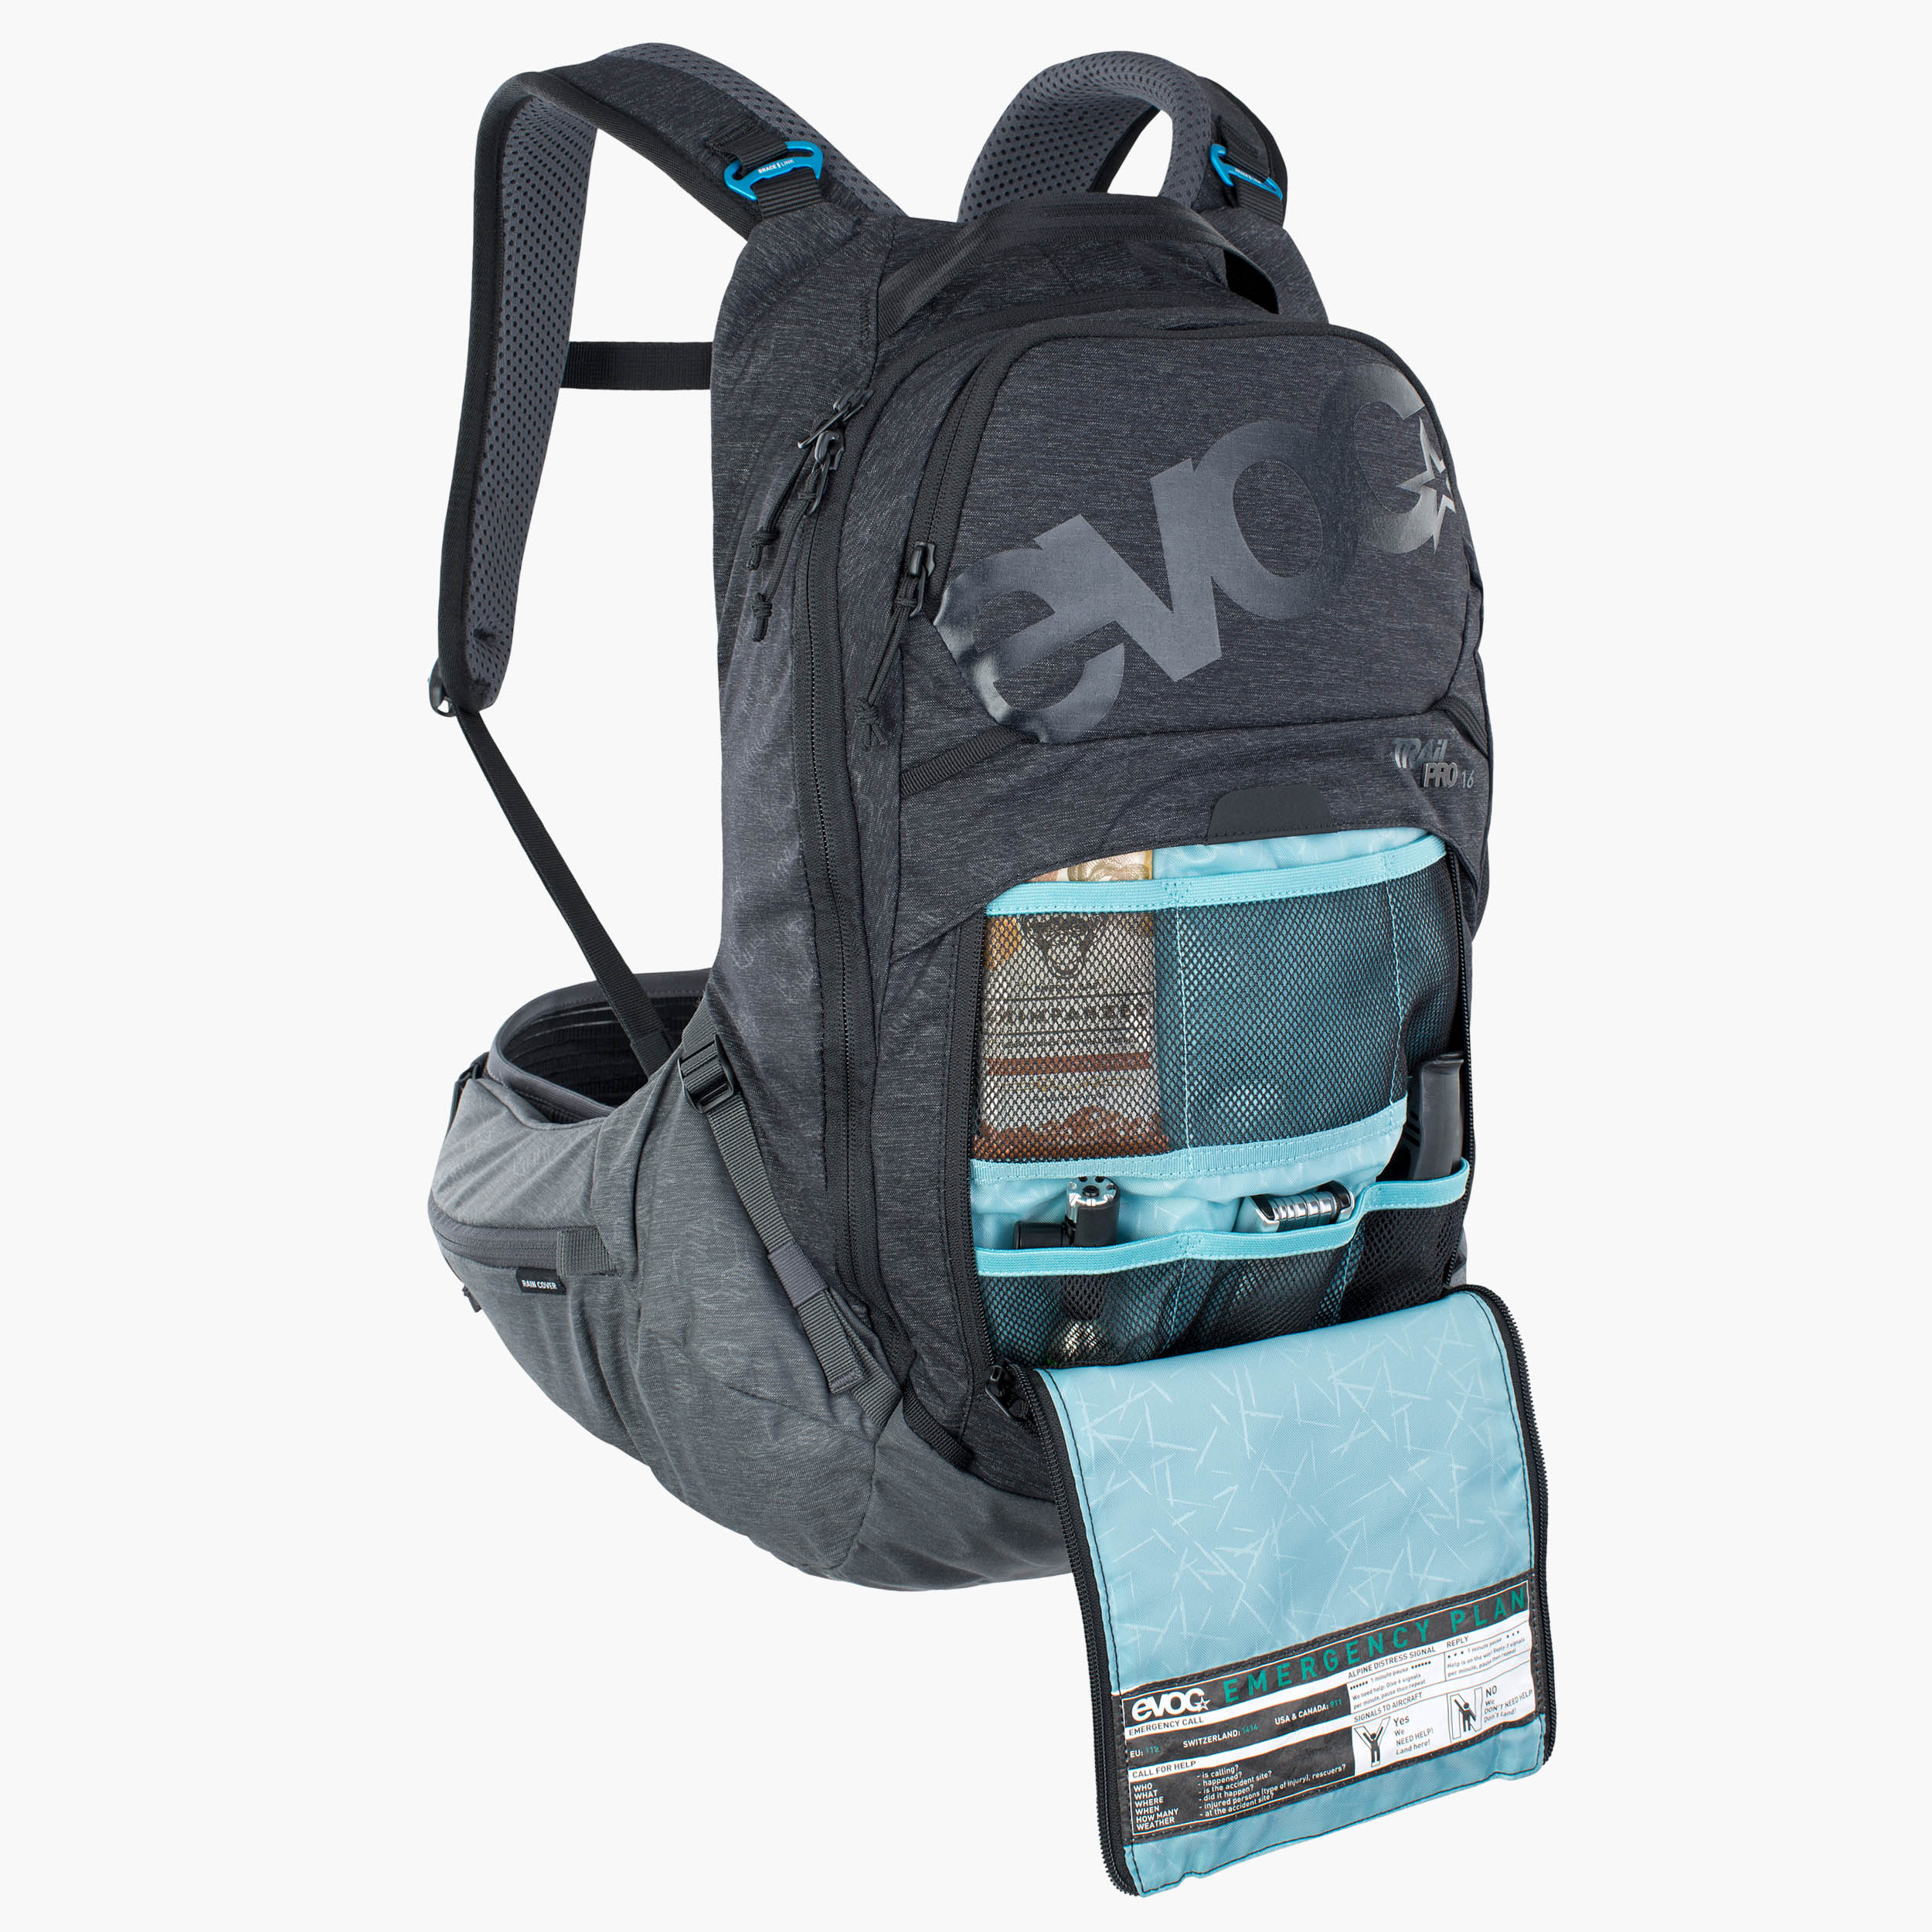 Trail backpack 30l | Halfar luggage and bags | Halfar | Goodies